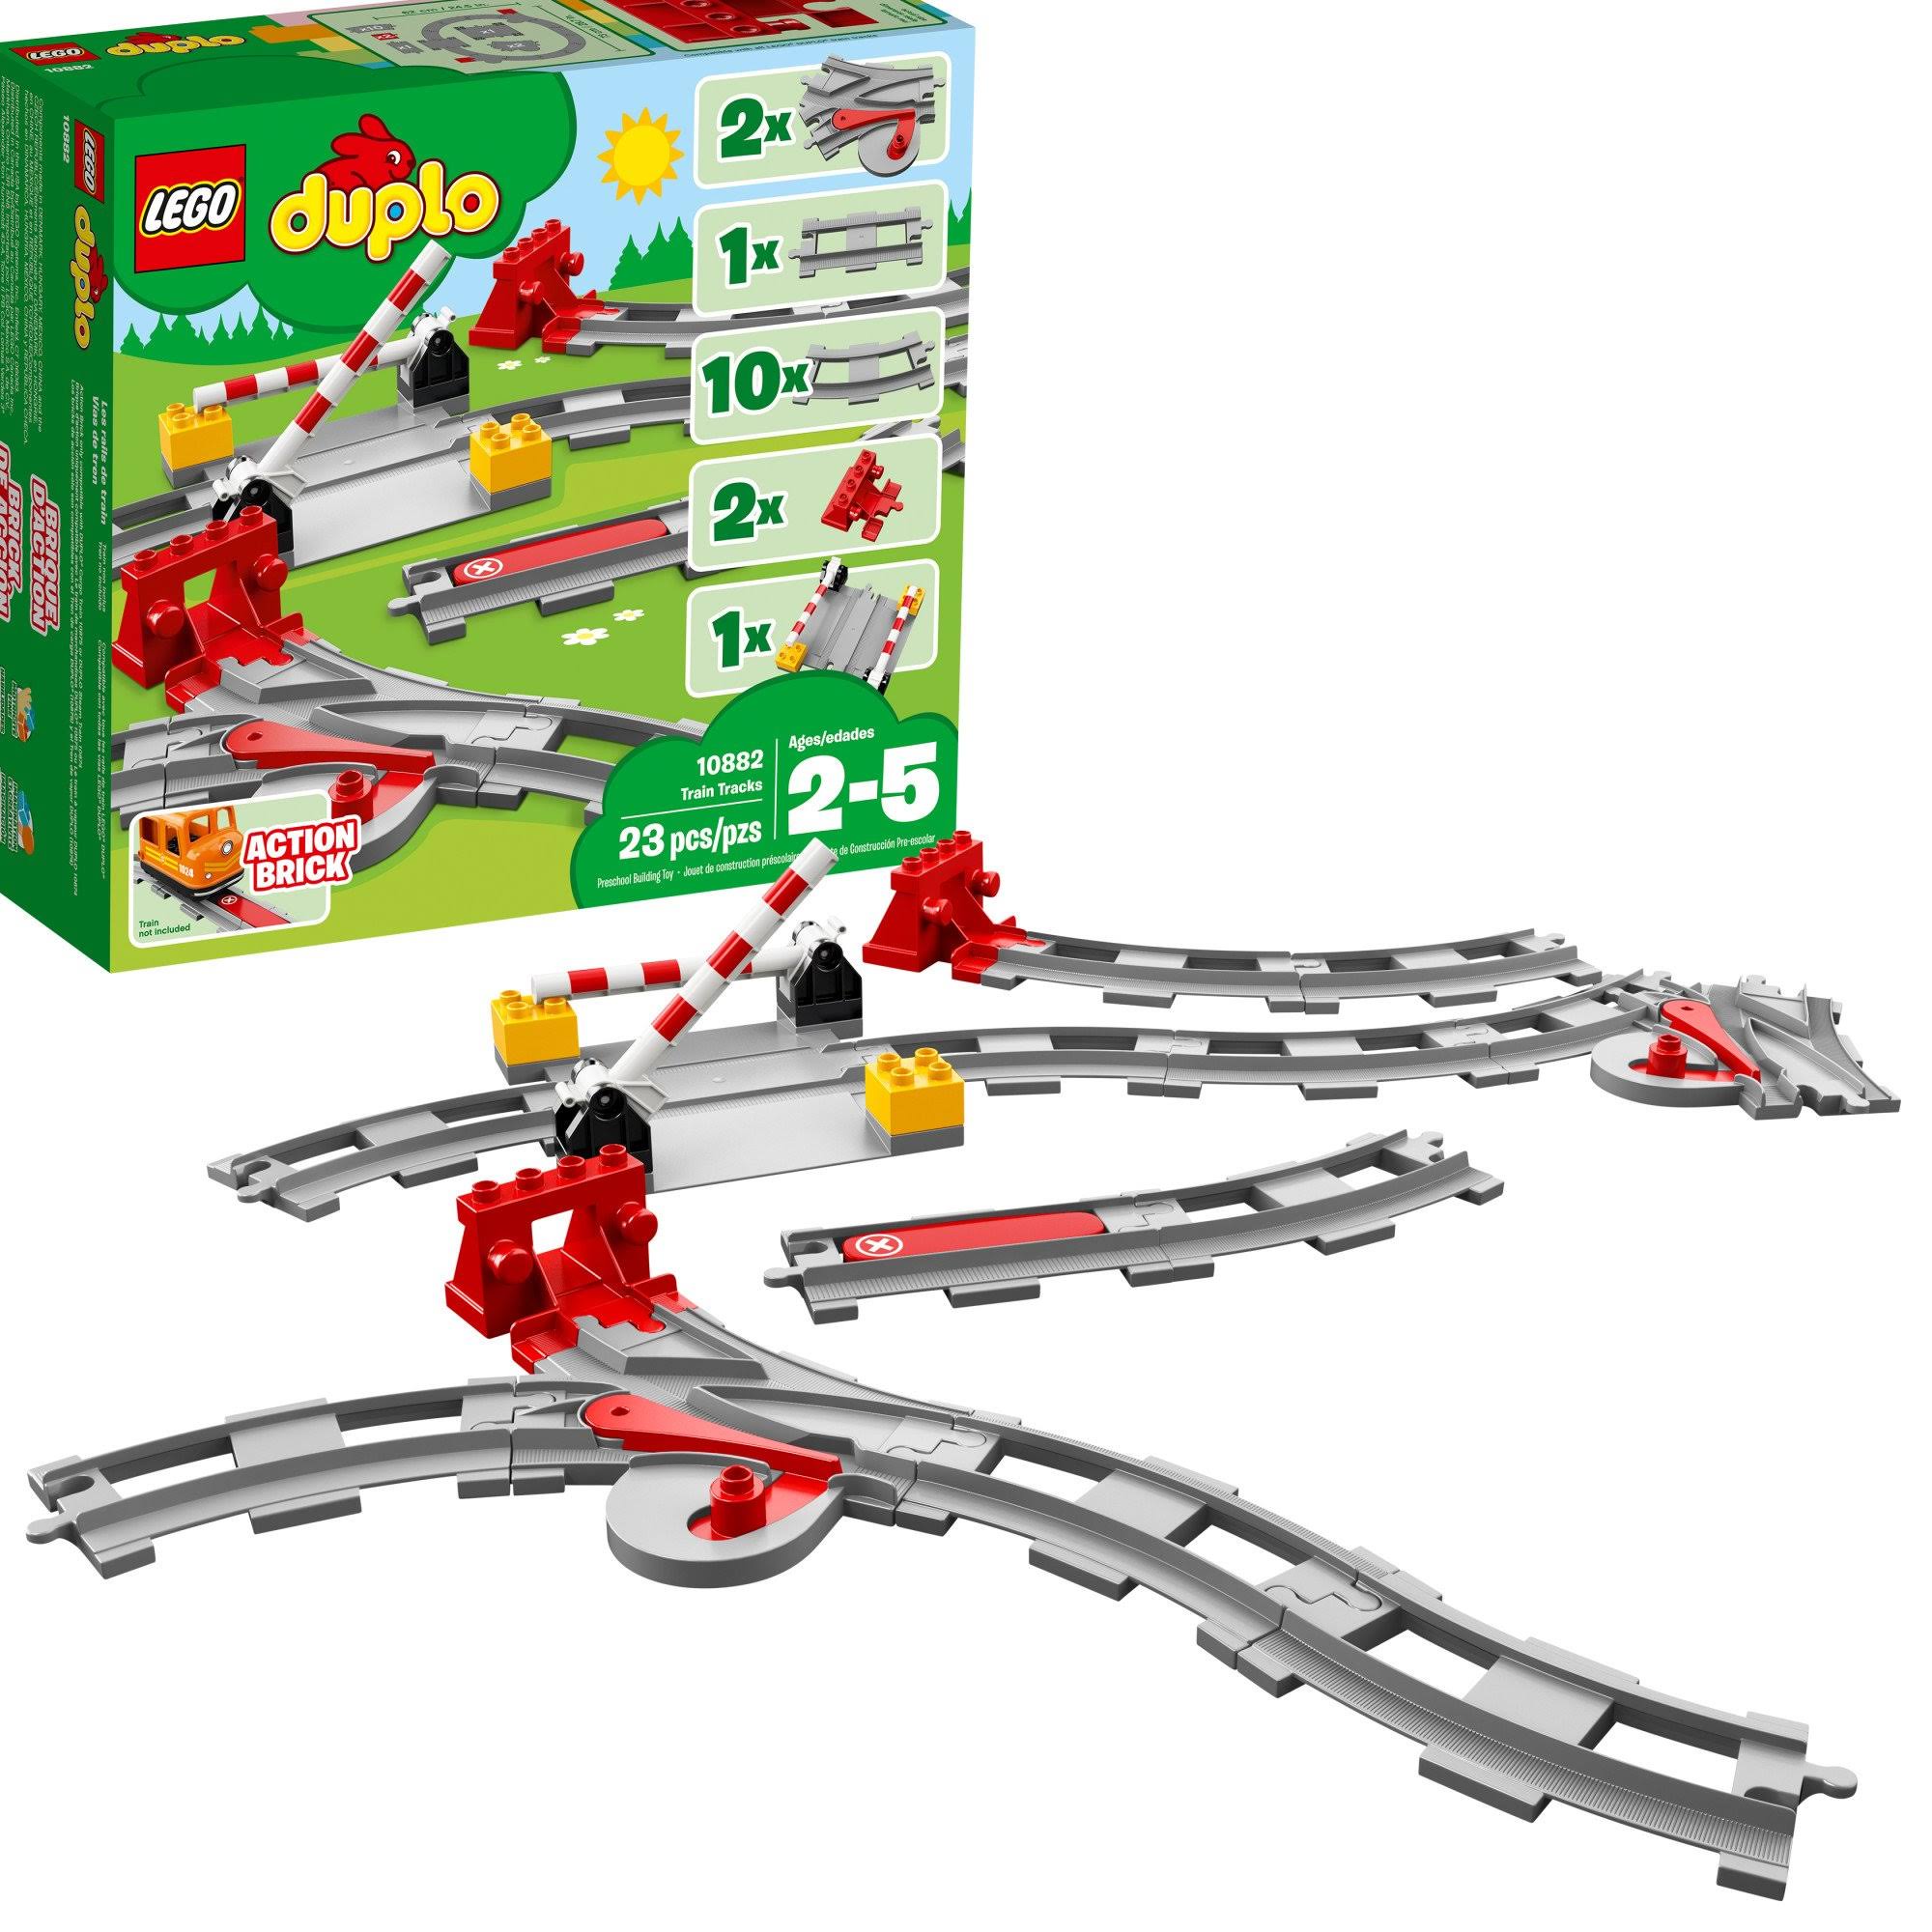 LEGO Duplo Train Tracks 10882 Building Blocks (23 Pieces)